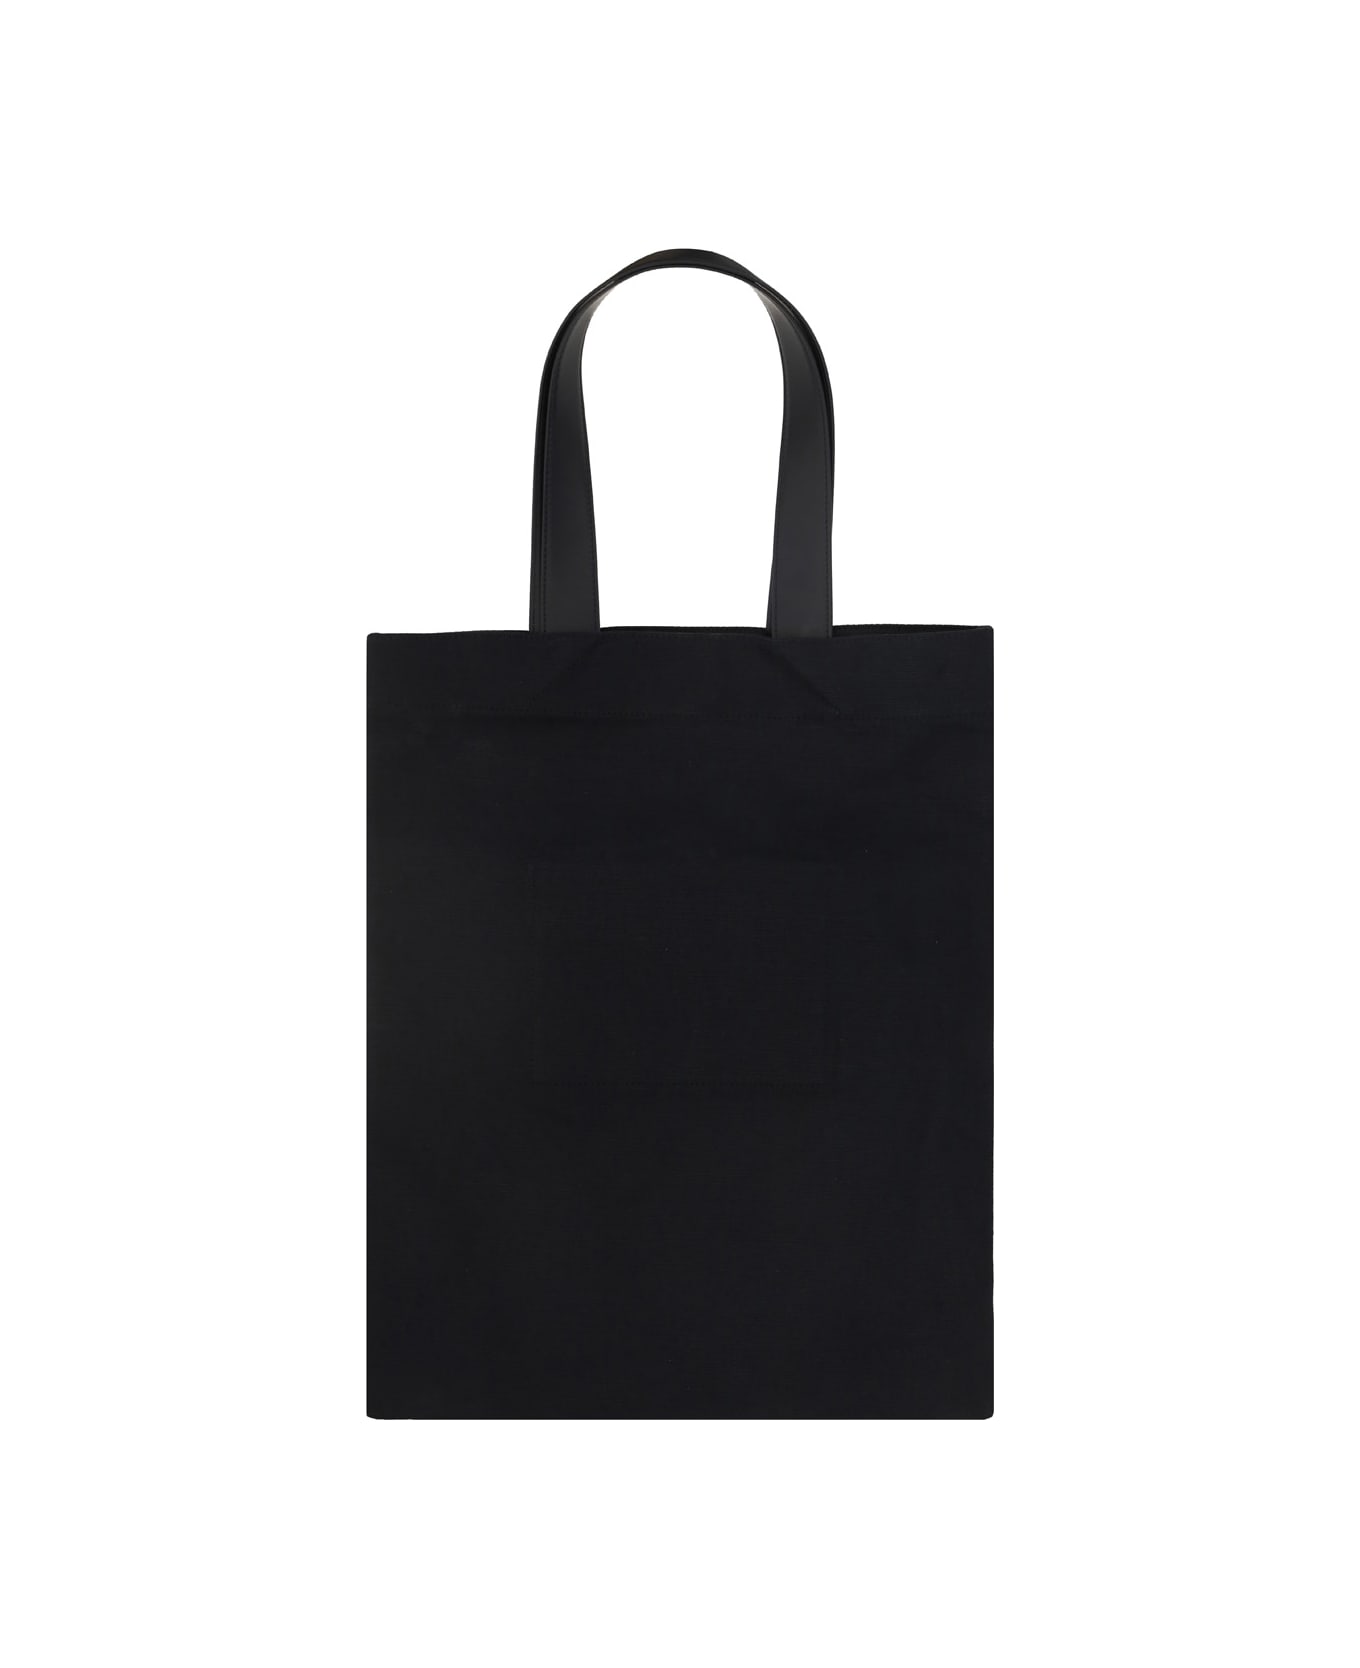 Jil Sander Shopping Bag - Nero トートバッグ